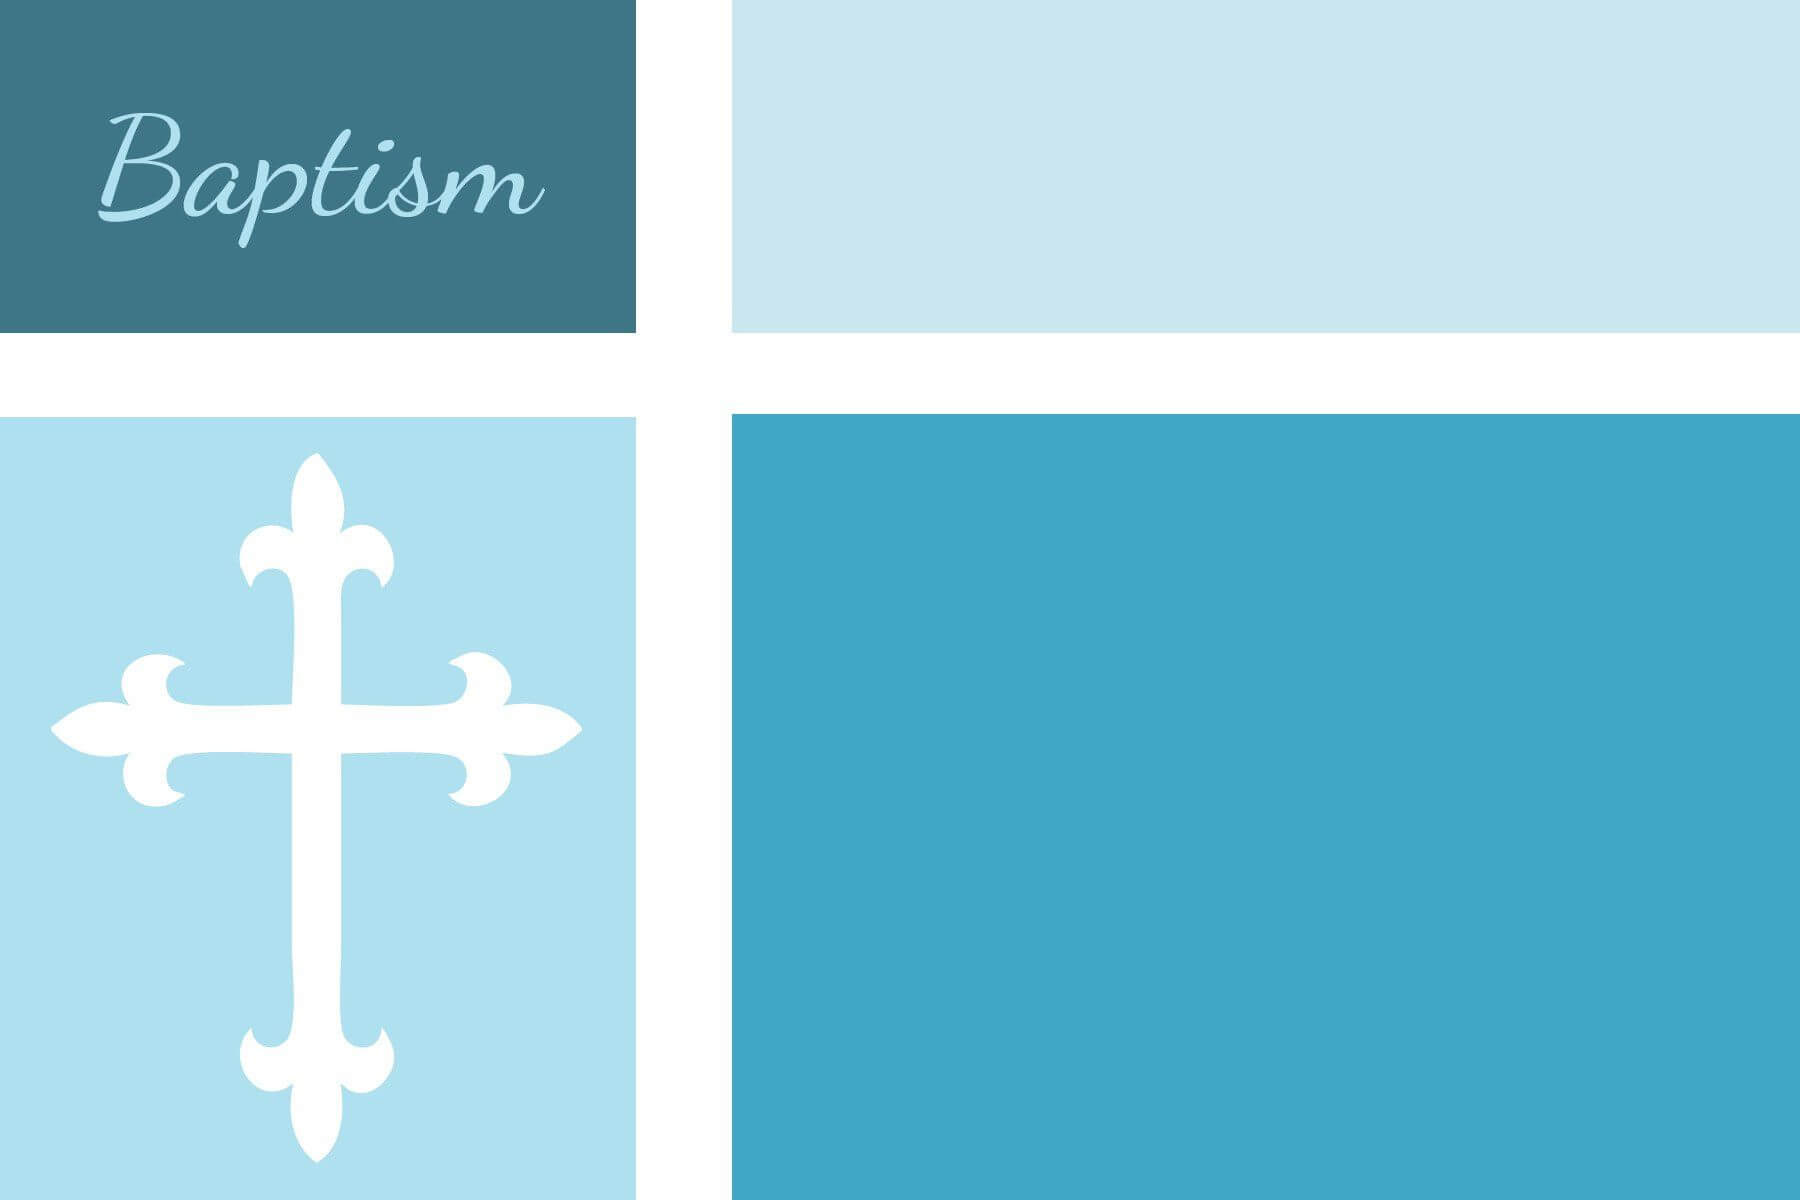 Baptism Invitation Blank Templates | Christening Invitations Within Blank Christening Invitation Templates